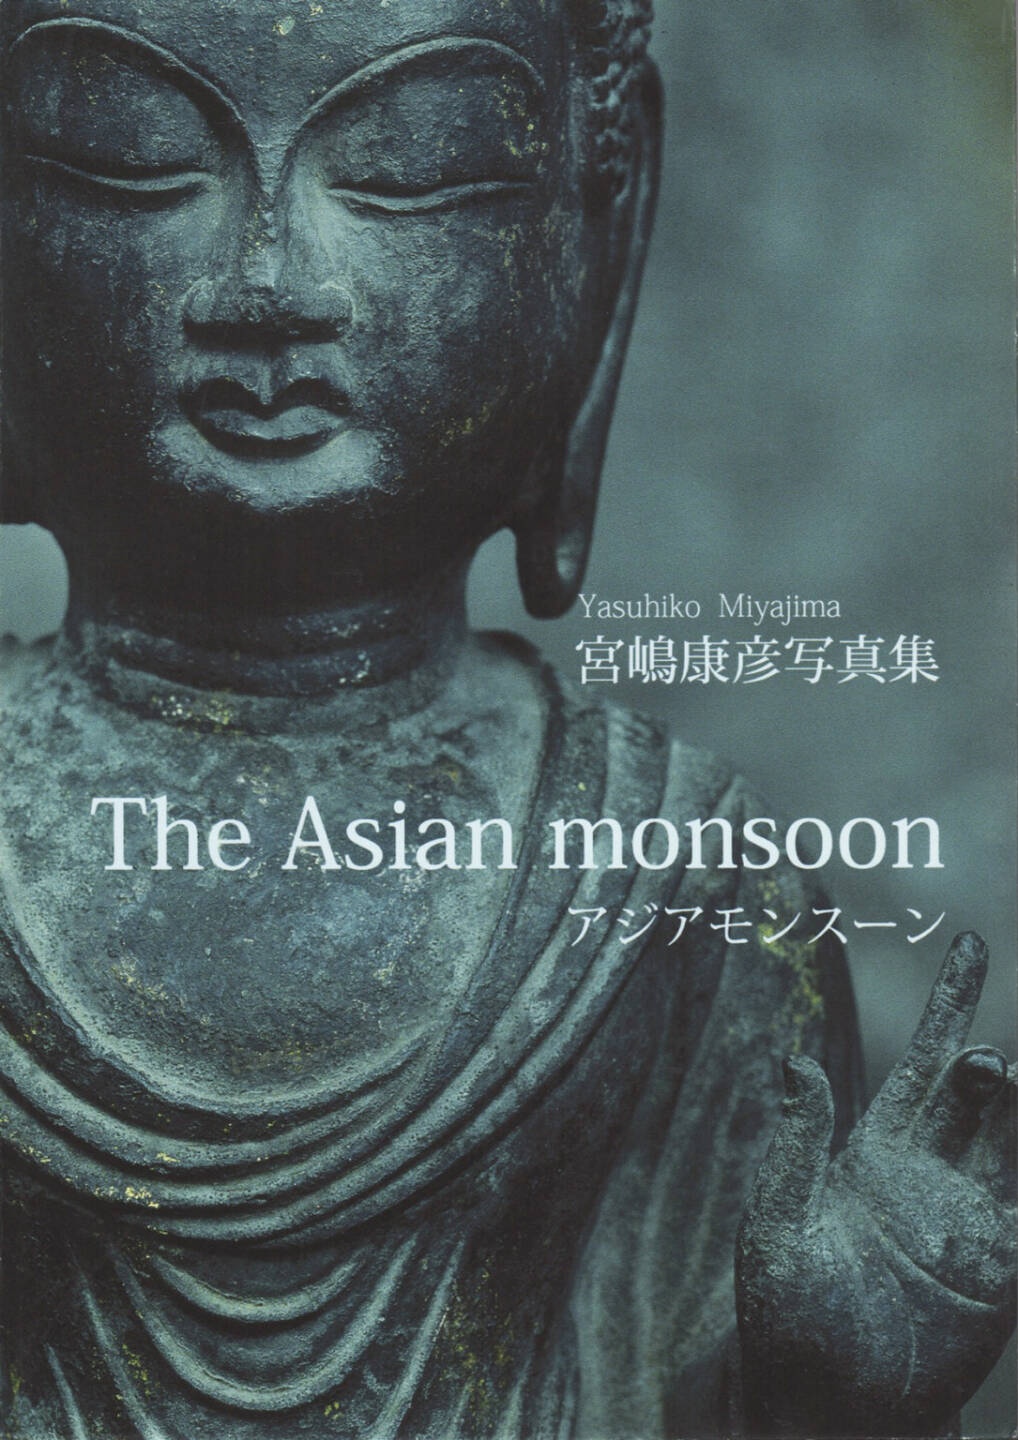 Yasuhiko Miyajima - The Asian monsoon アジアモンスーン, Office Hippo 2014, Cover - http://josefchladek.com/book/yasuhiko_miyajima_-_the_asian_monsoon_アジアモンスーン